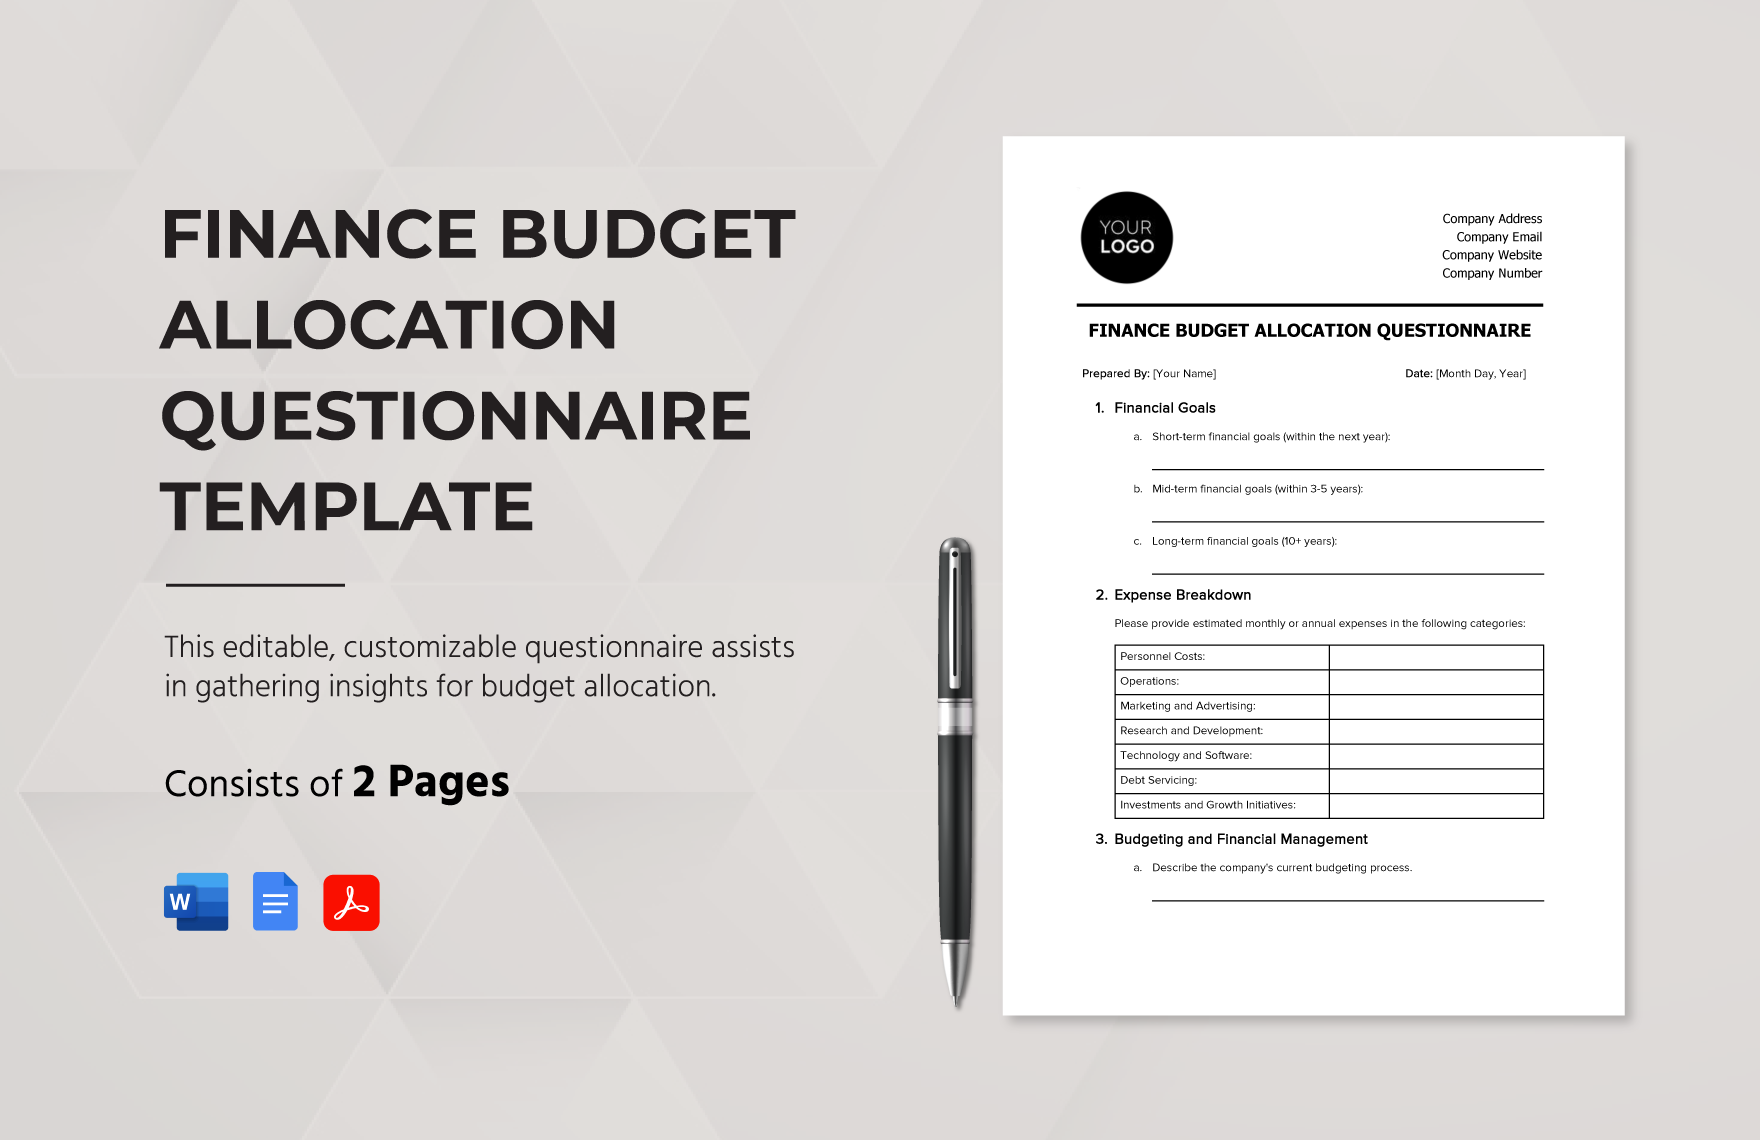 Finance Budget Allocation Questionnaire Template